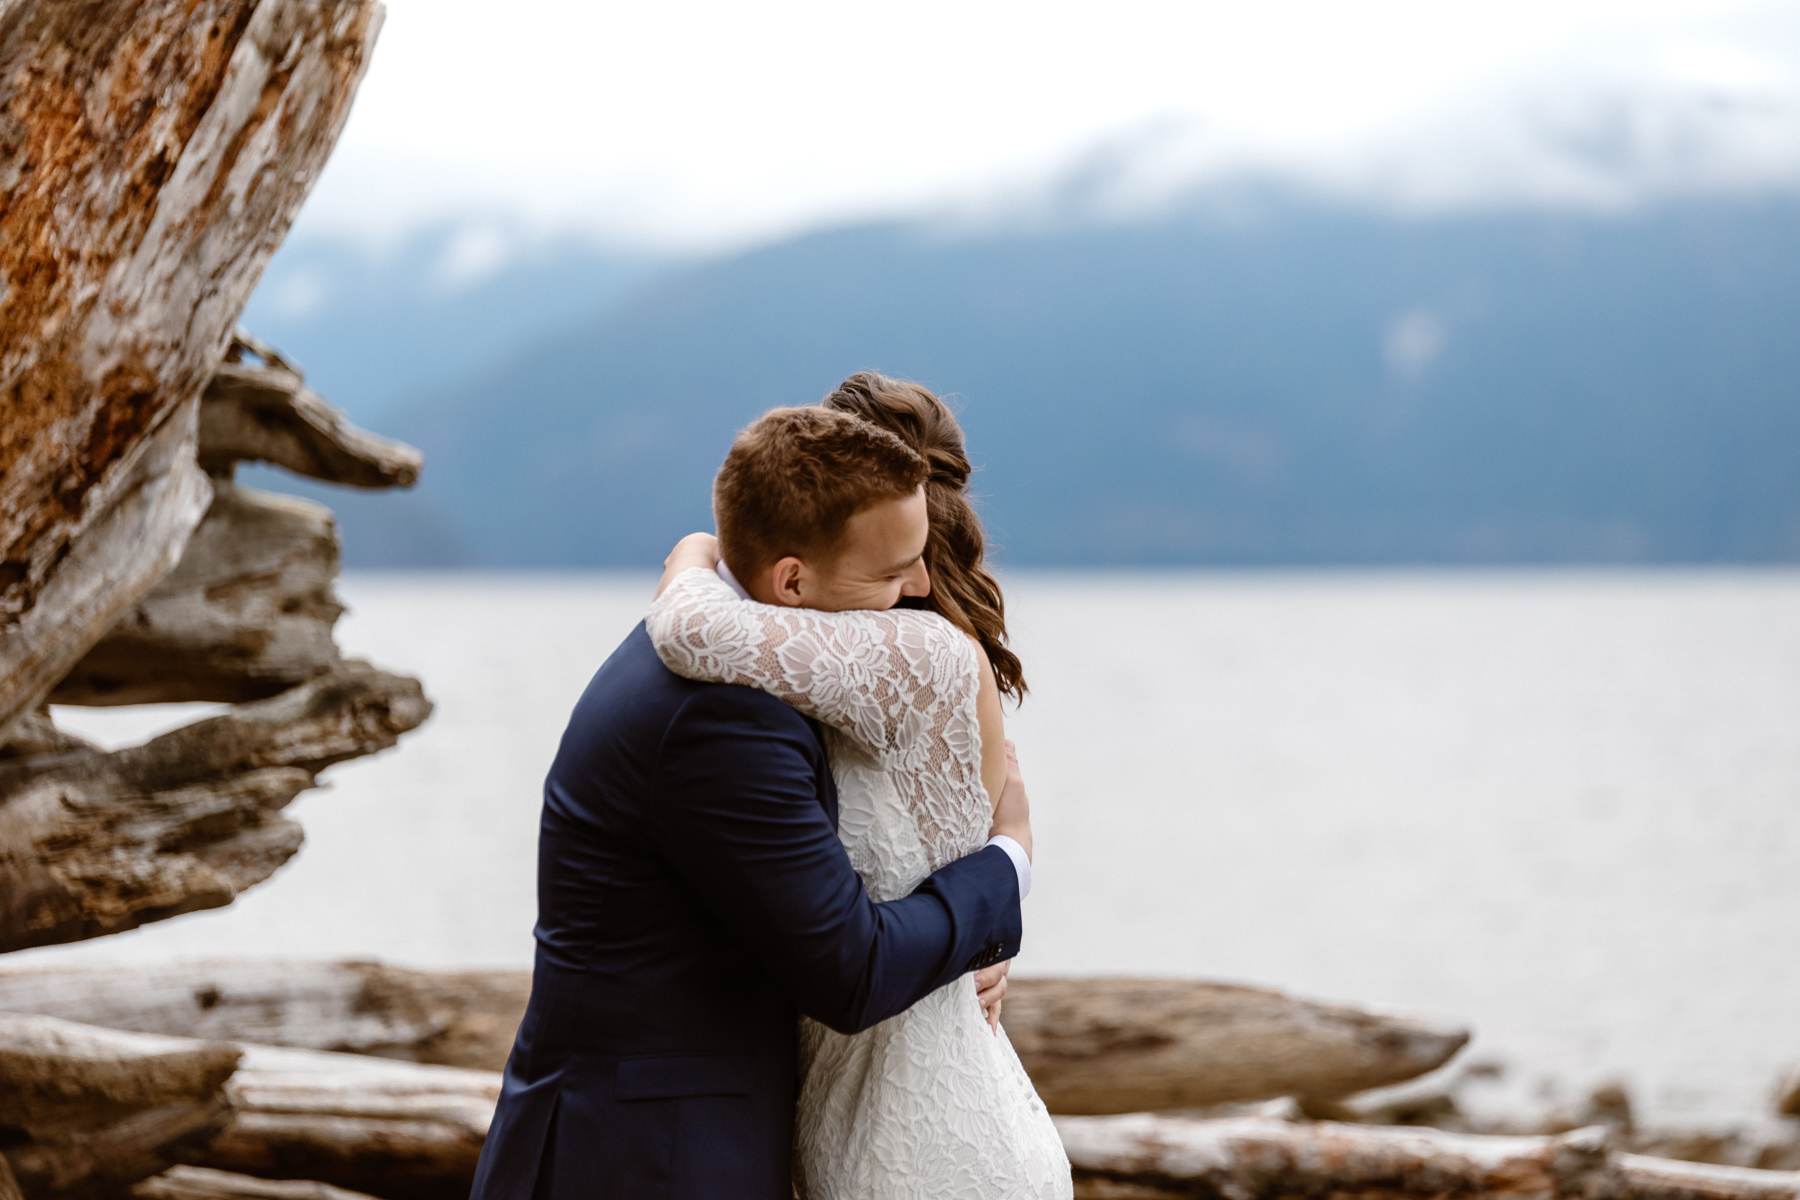 Squamish Wedding Photographers at an Adventurous Elopement - Image 5